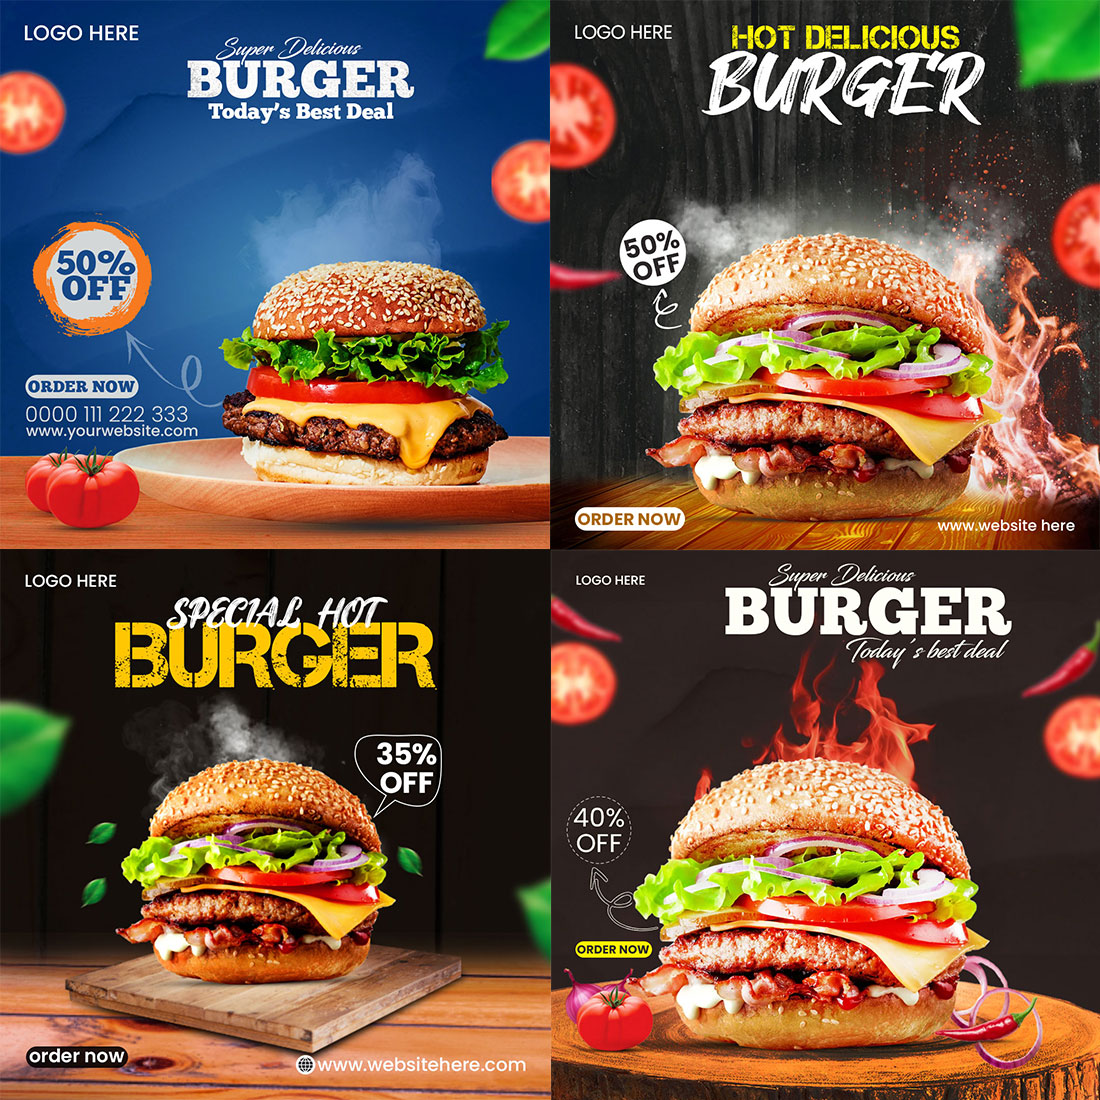 Burger Food Social Media Post Template cover image.